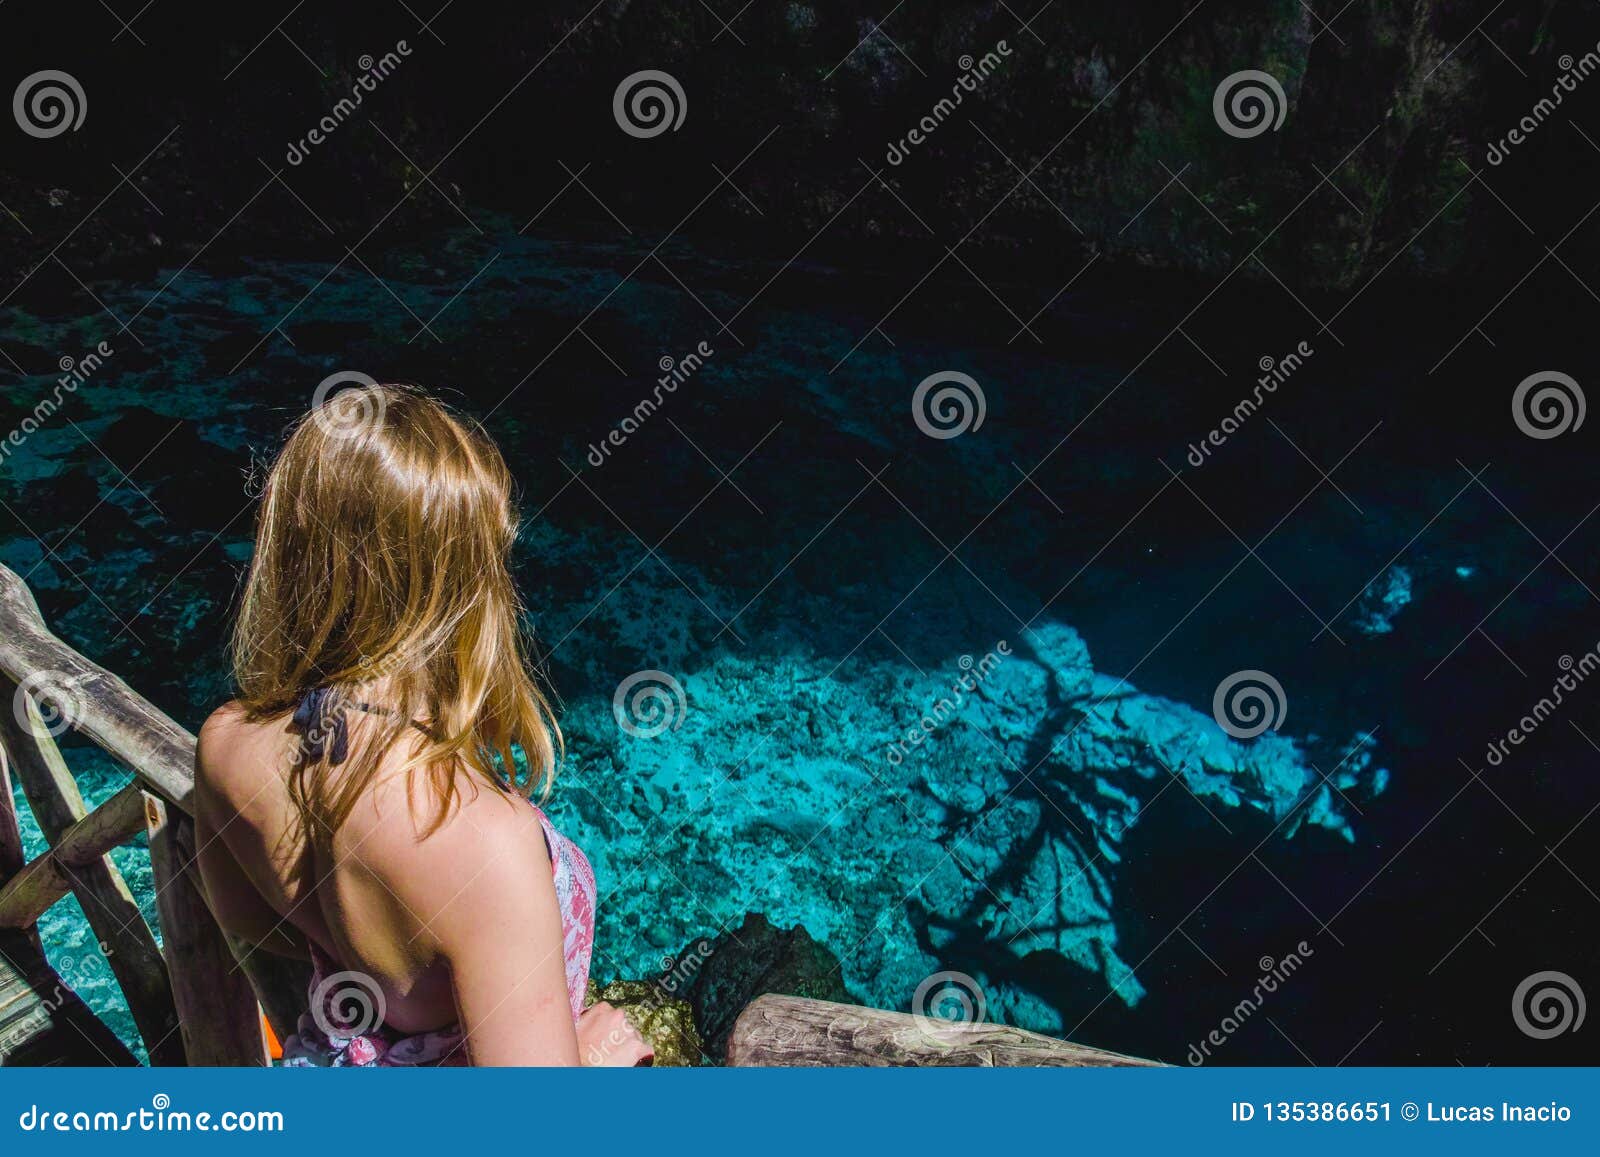 girl at hoyo azul in punta cana, dominican republic